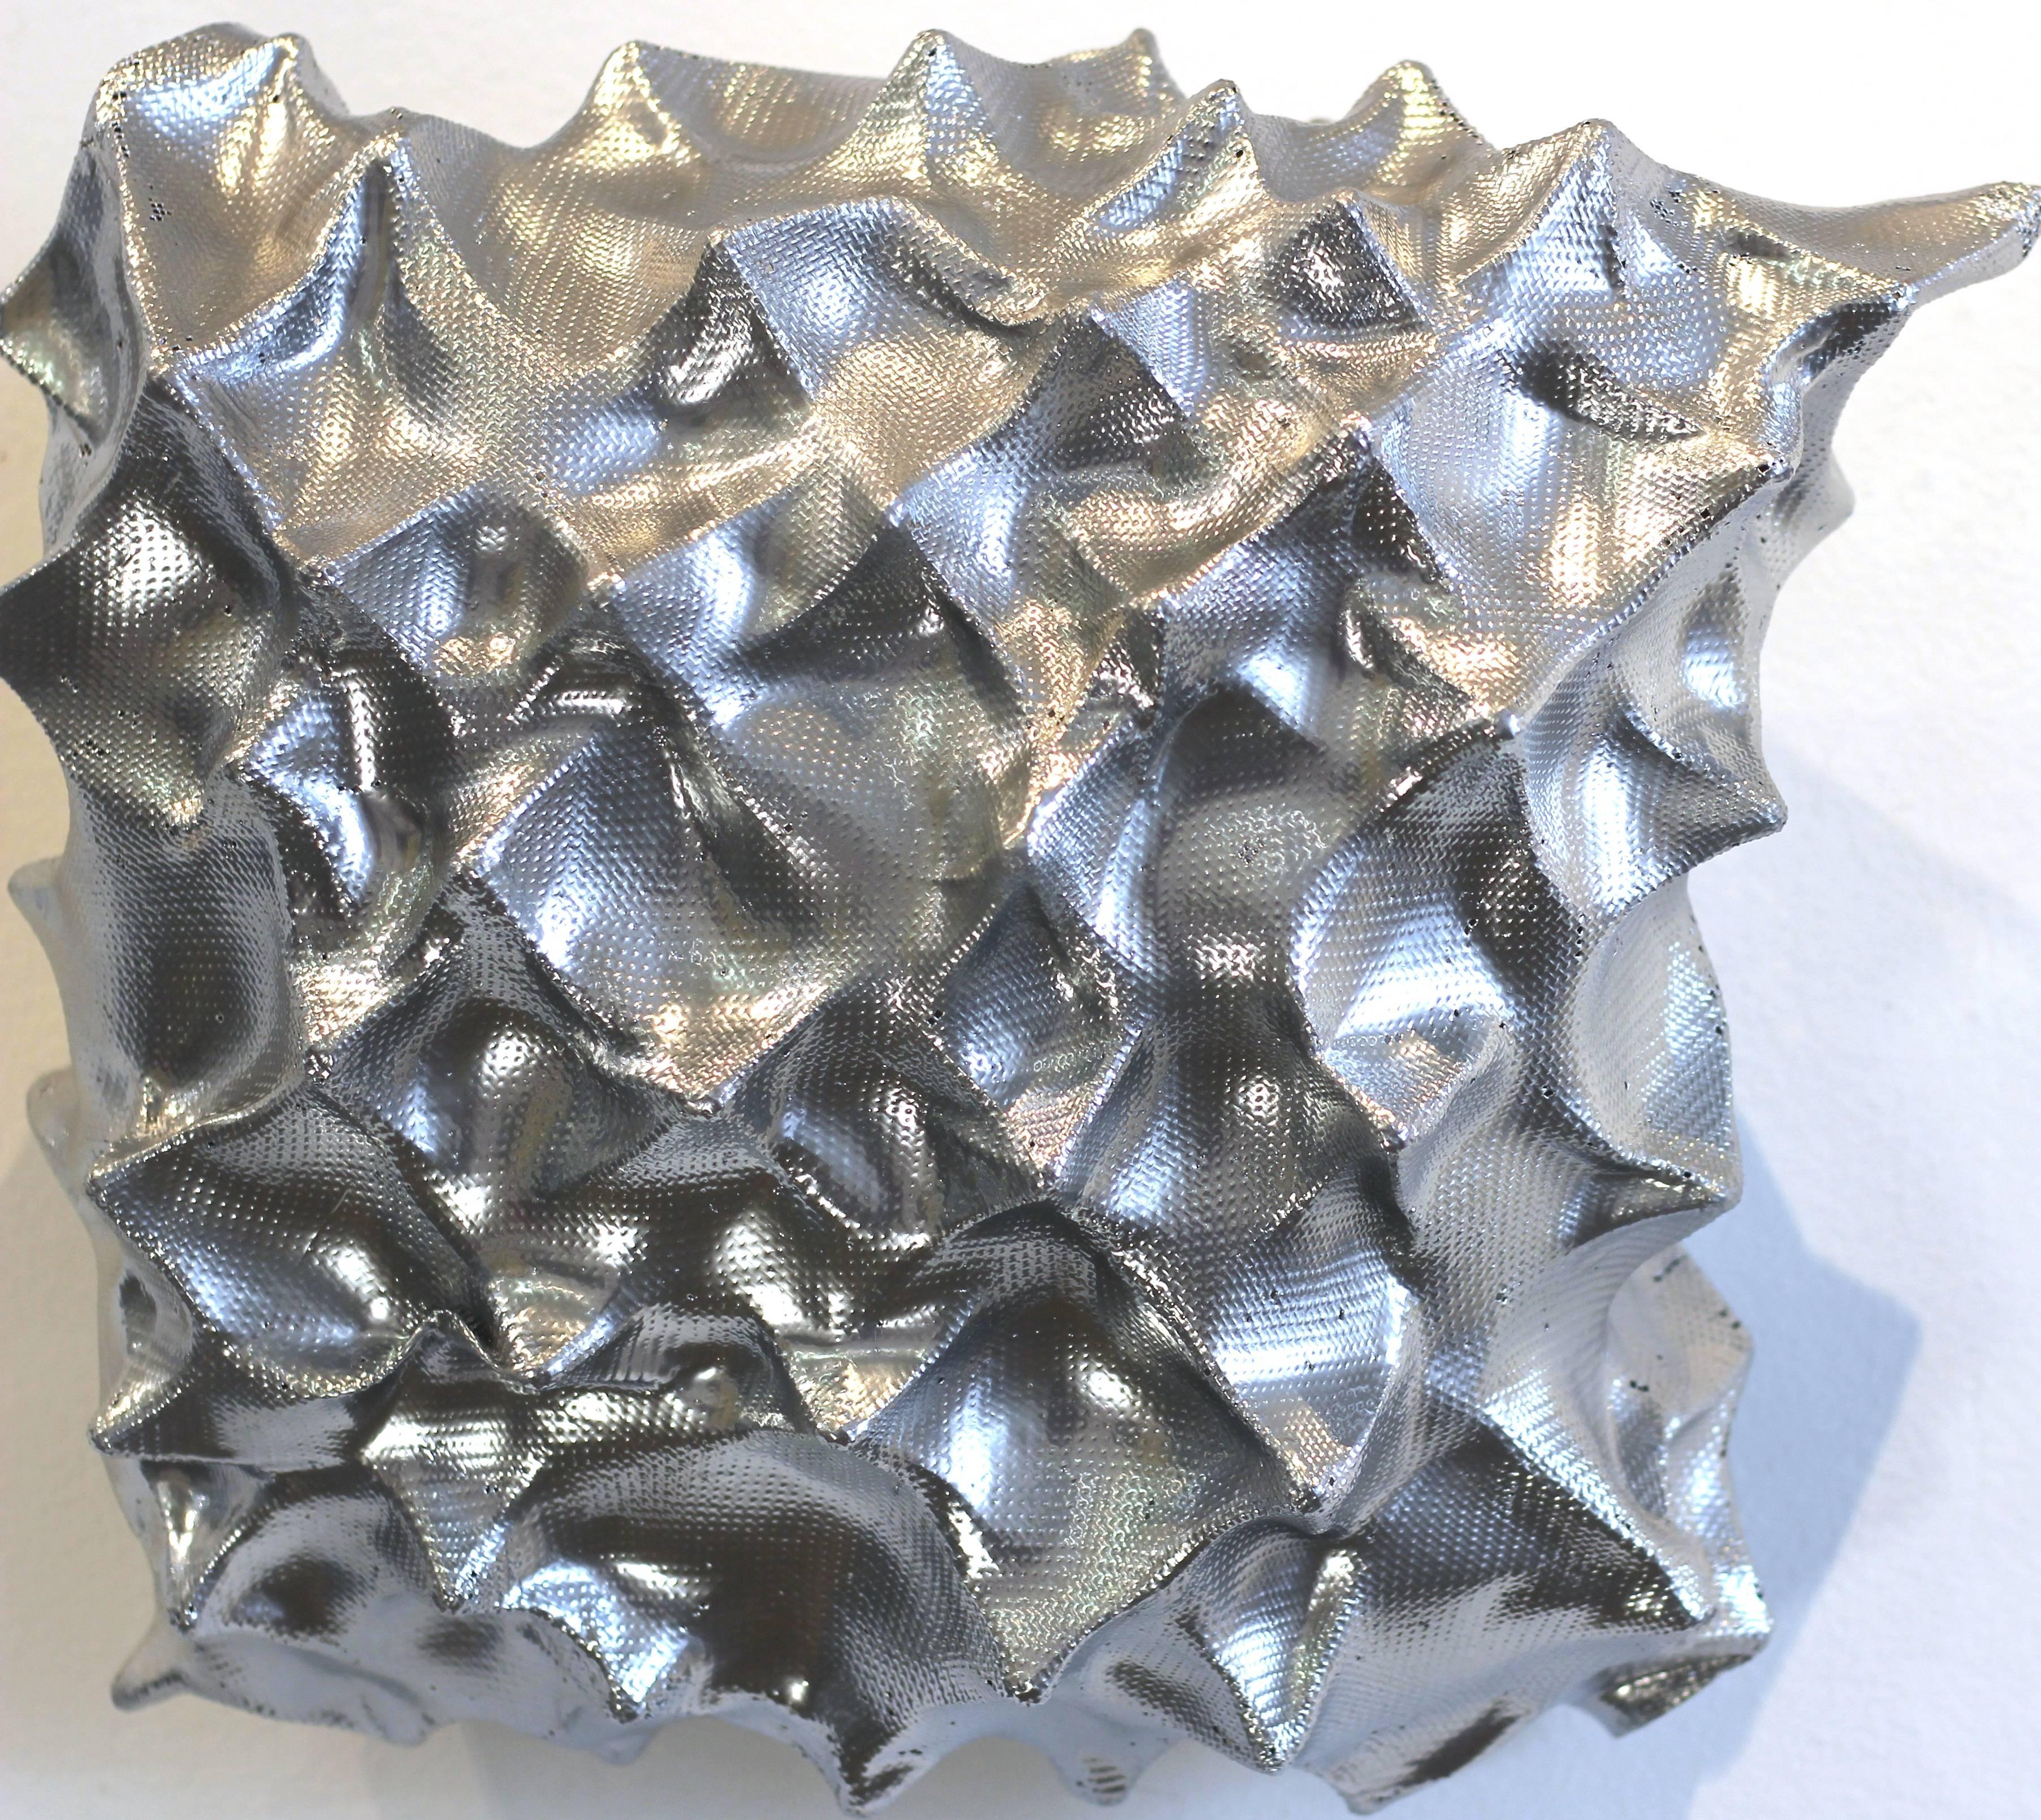 Pillow Cloud II - Silver Three-Dimensional Lightweight Metal Wall Art - Contemporary Sculpture by Atticus Adams